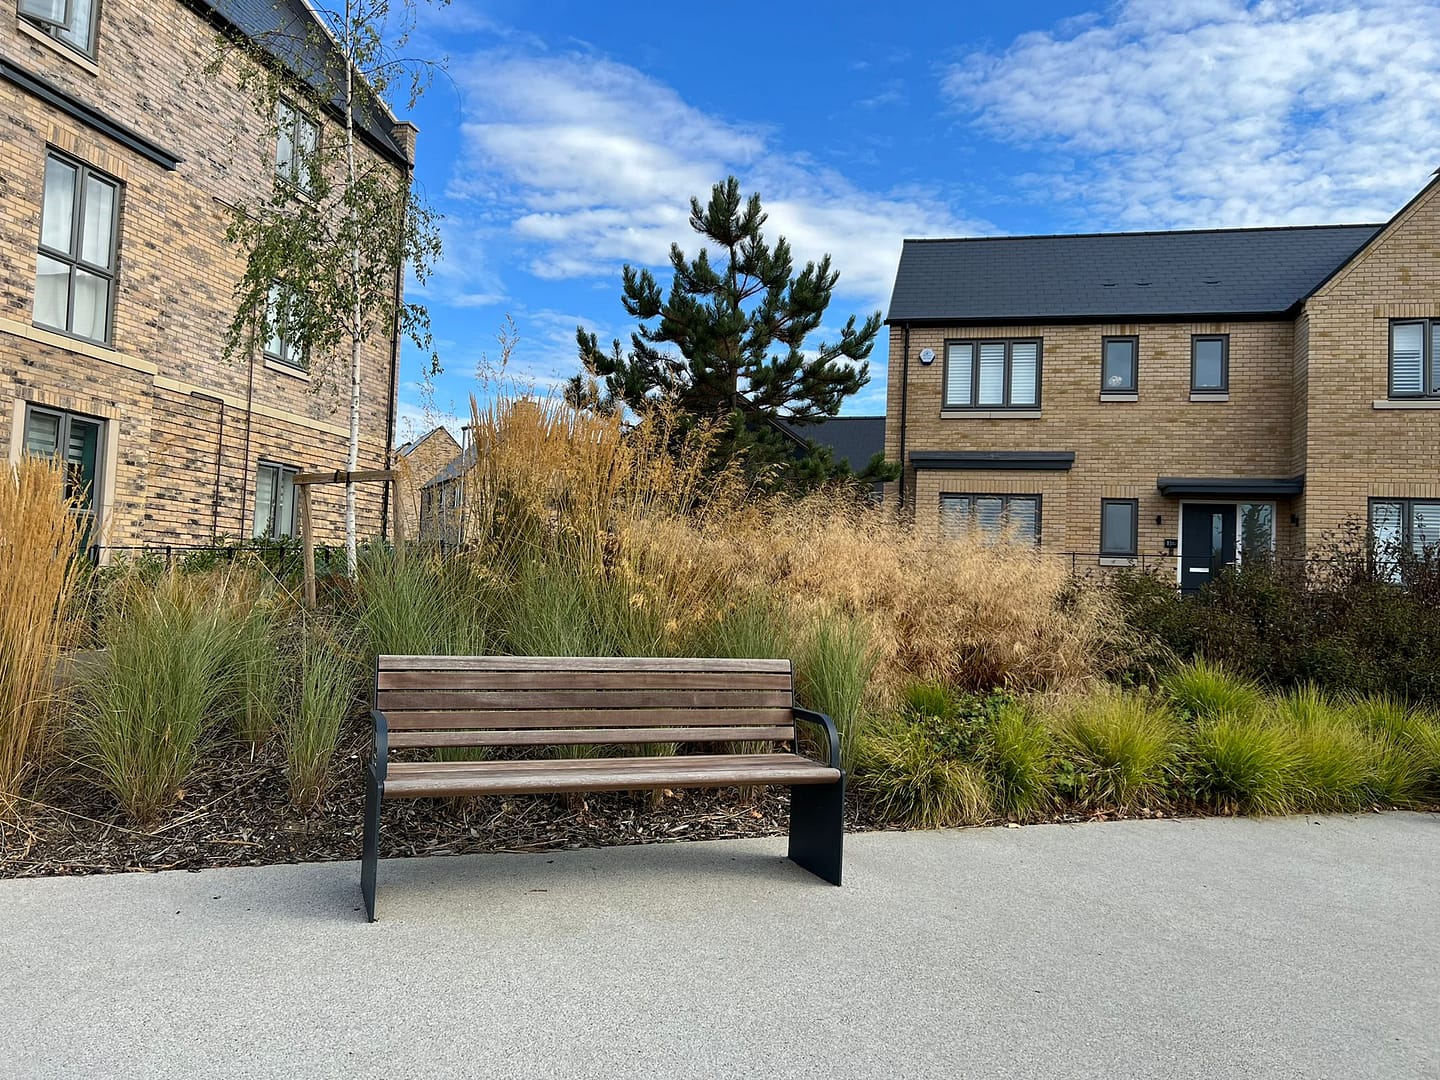 Landscape park design bench with grass planting in residential devlopment